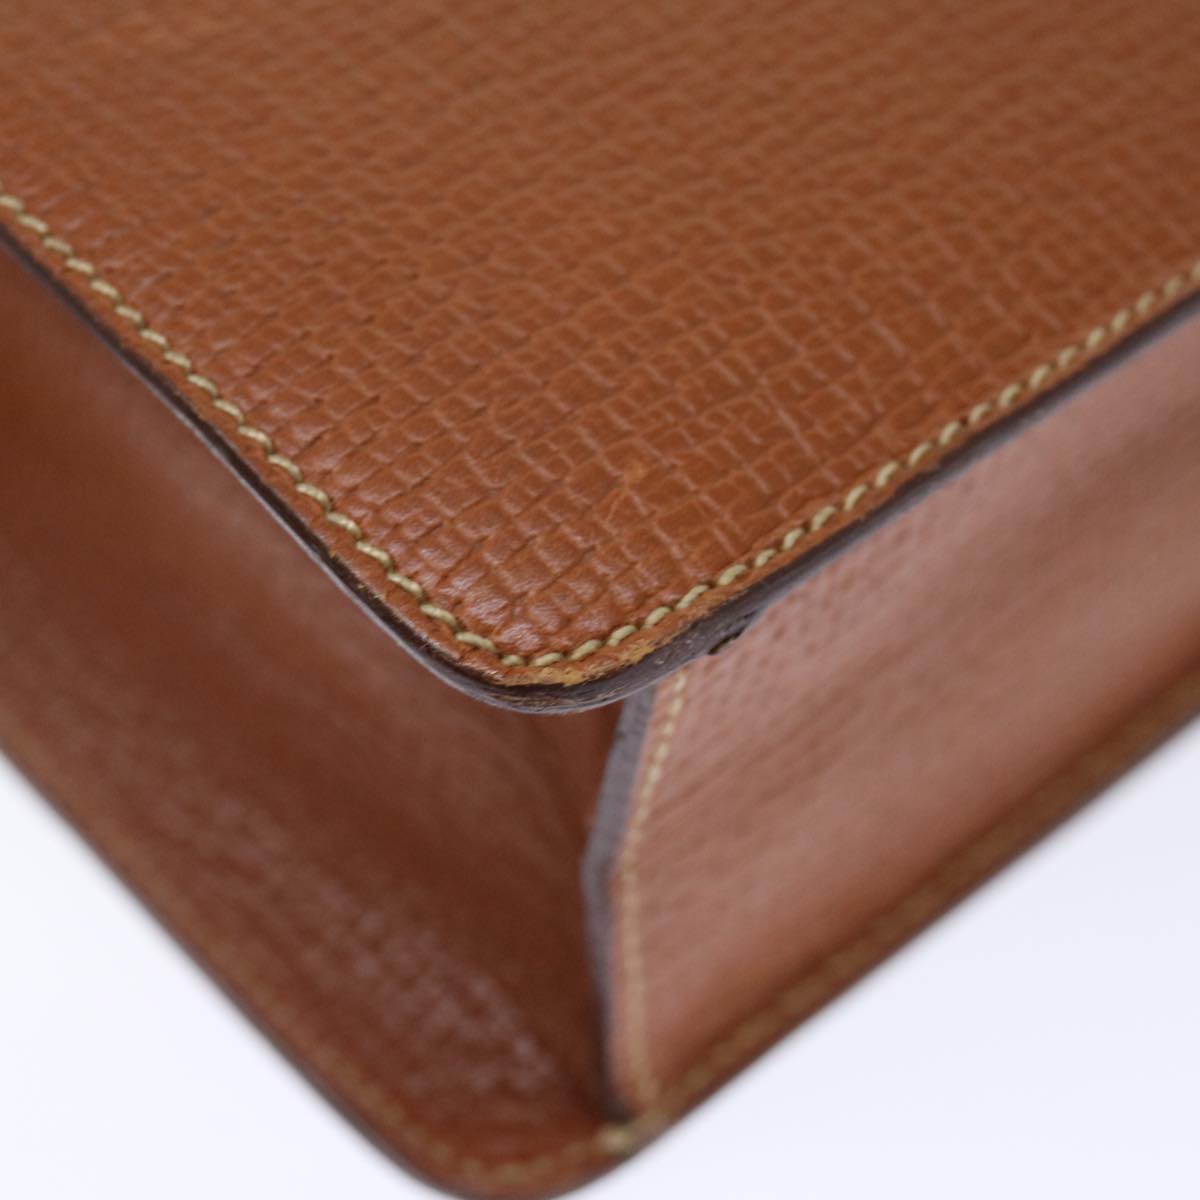 LOEWE Hand Bag Leather Brown Auth 71590